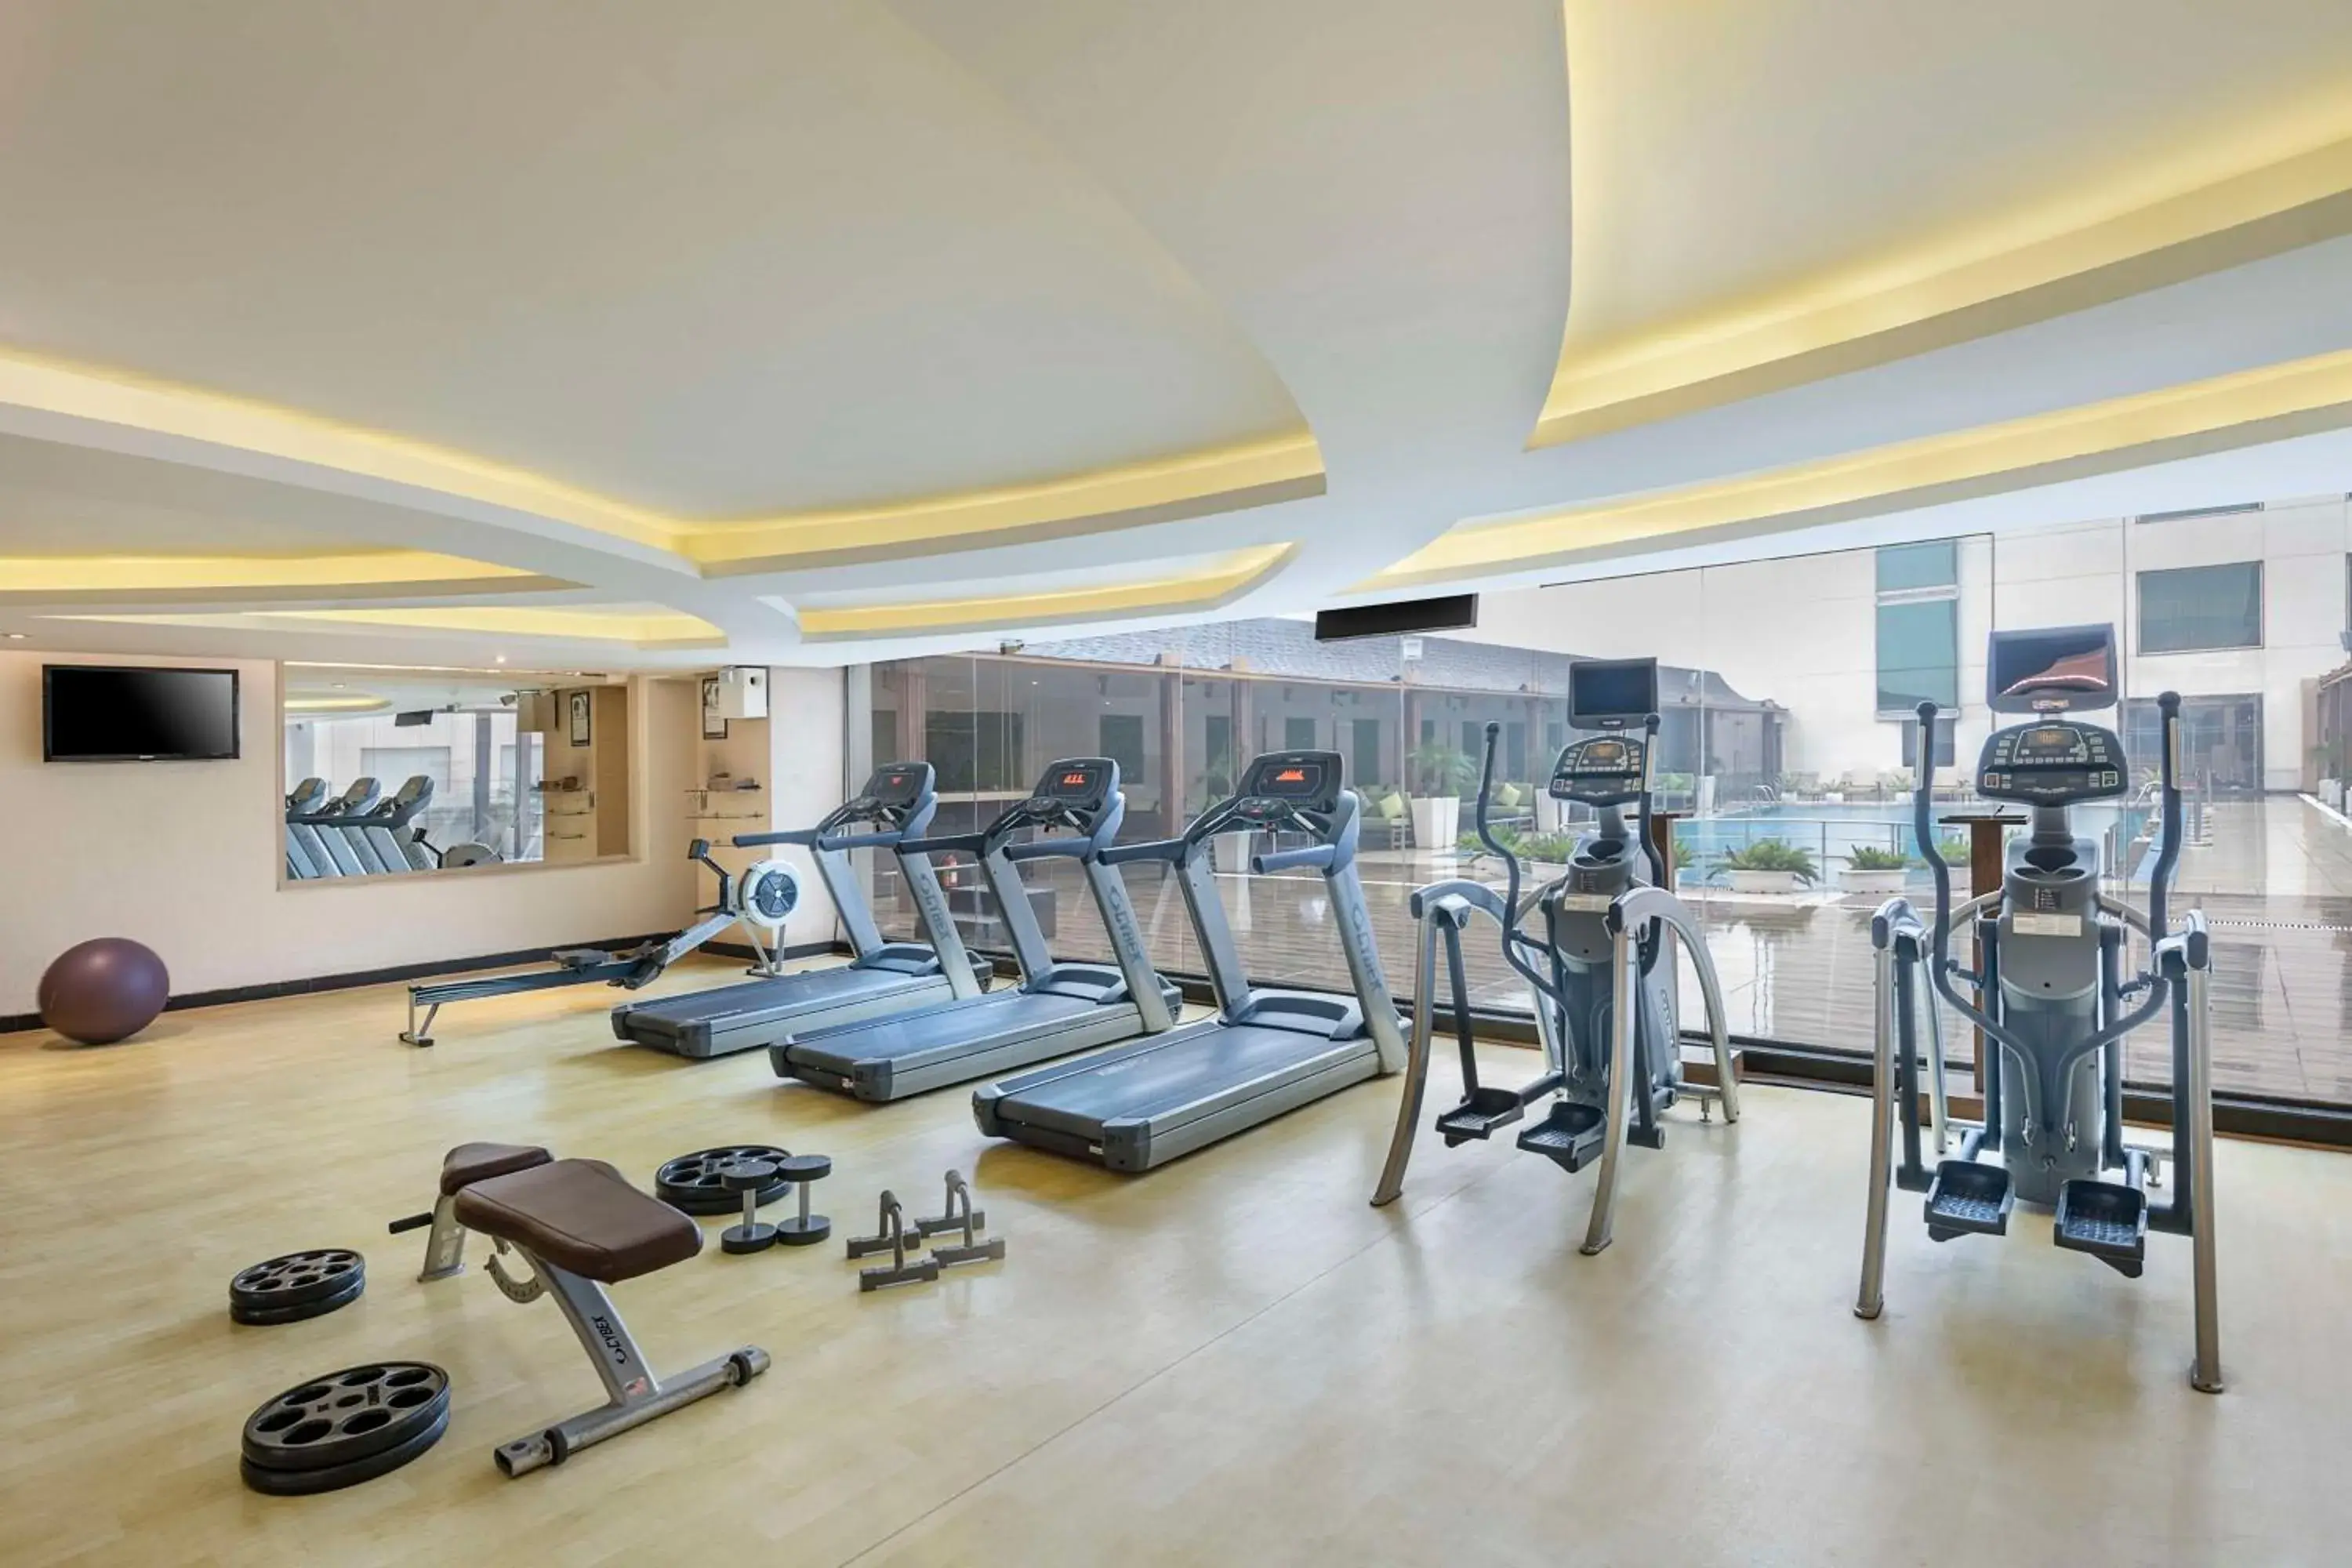 Fitness centre/facilities, Fitness Center/Facilities in Radisson Blu Kaushambi Delhi NCR